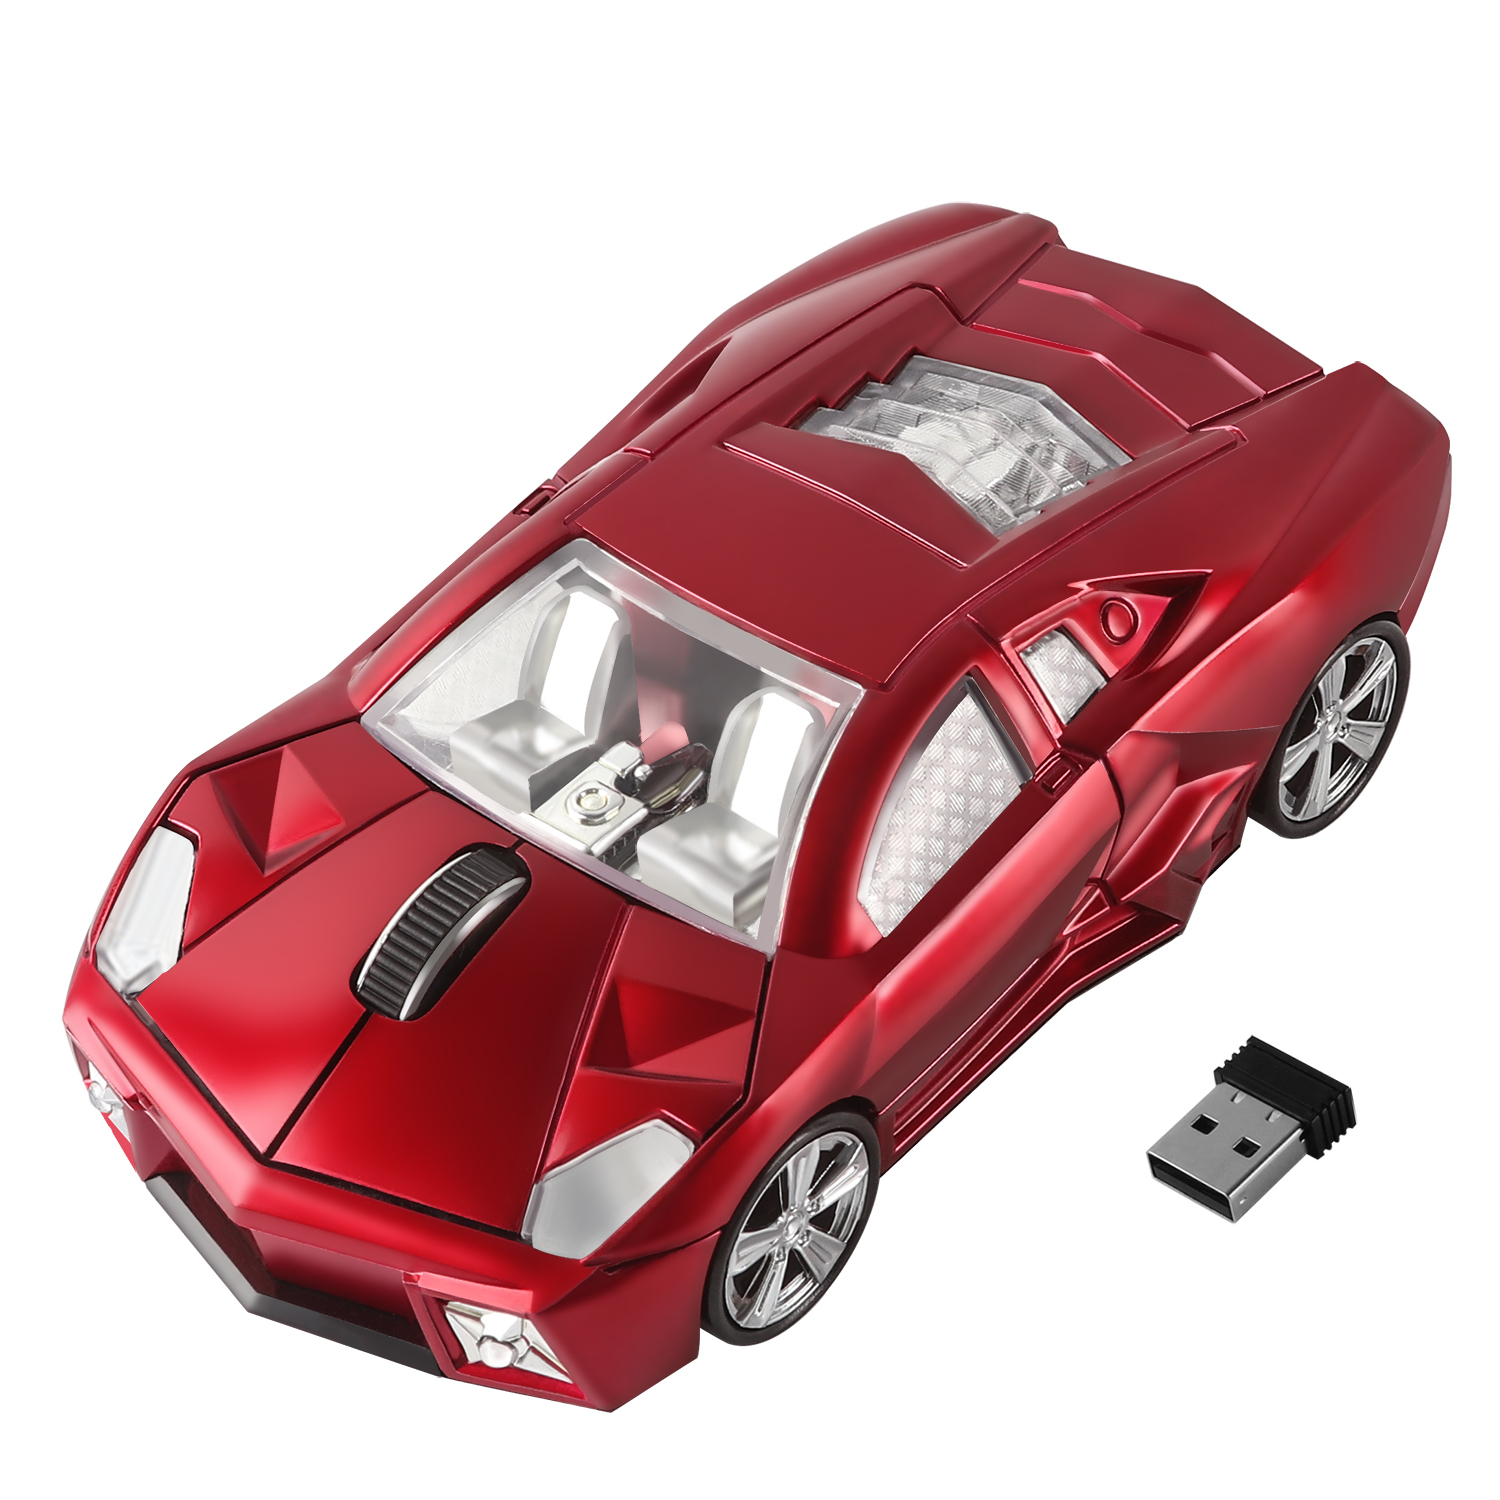 2-4G-Wireless-Mouse-Ergonomic-Sports-Car-Design-Gaming-Mause-1600-DPI-USB-Ottical-Kids-Regalo (11)